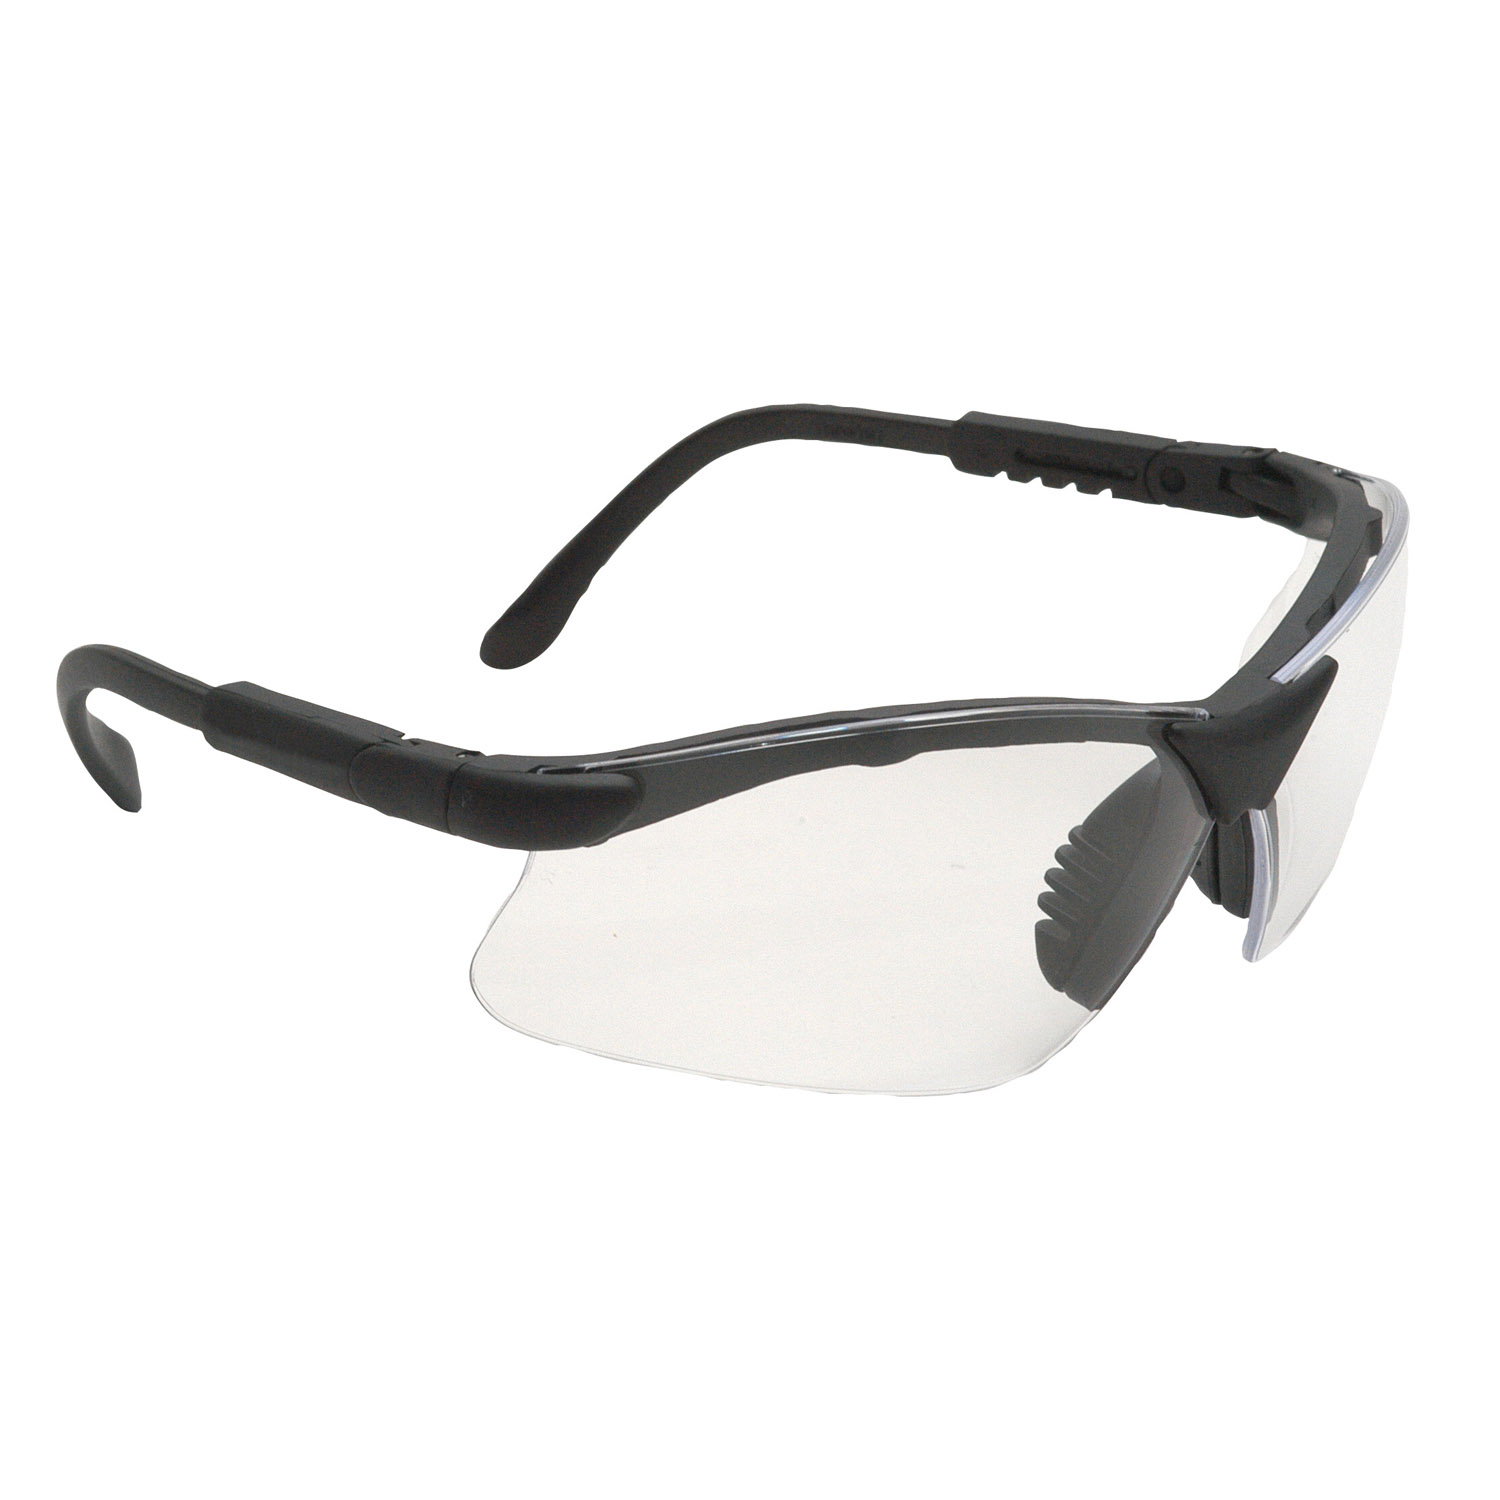 Revelation™ Safety Eyewear - Black Frame - Clear Lens - Clear Lens